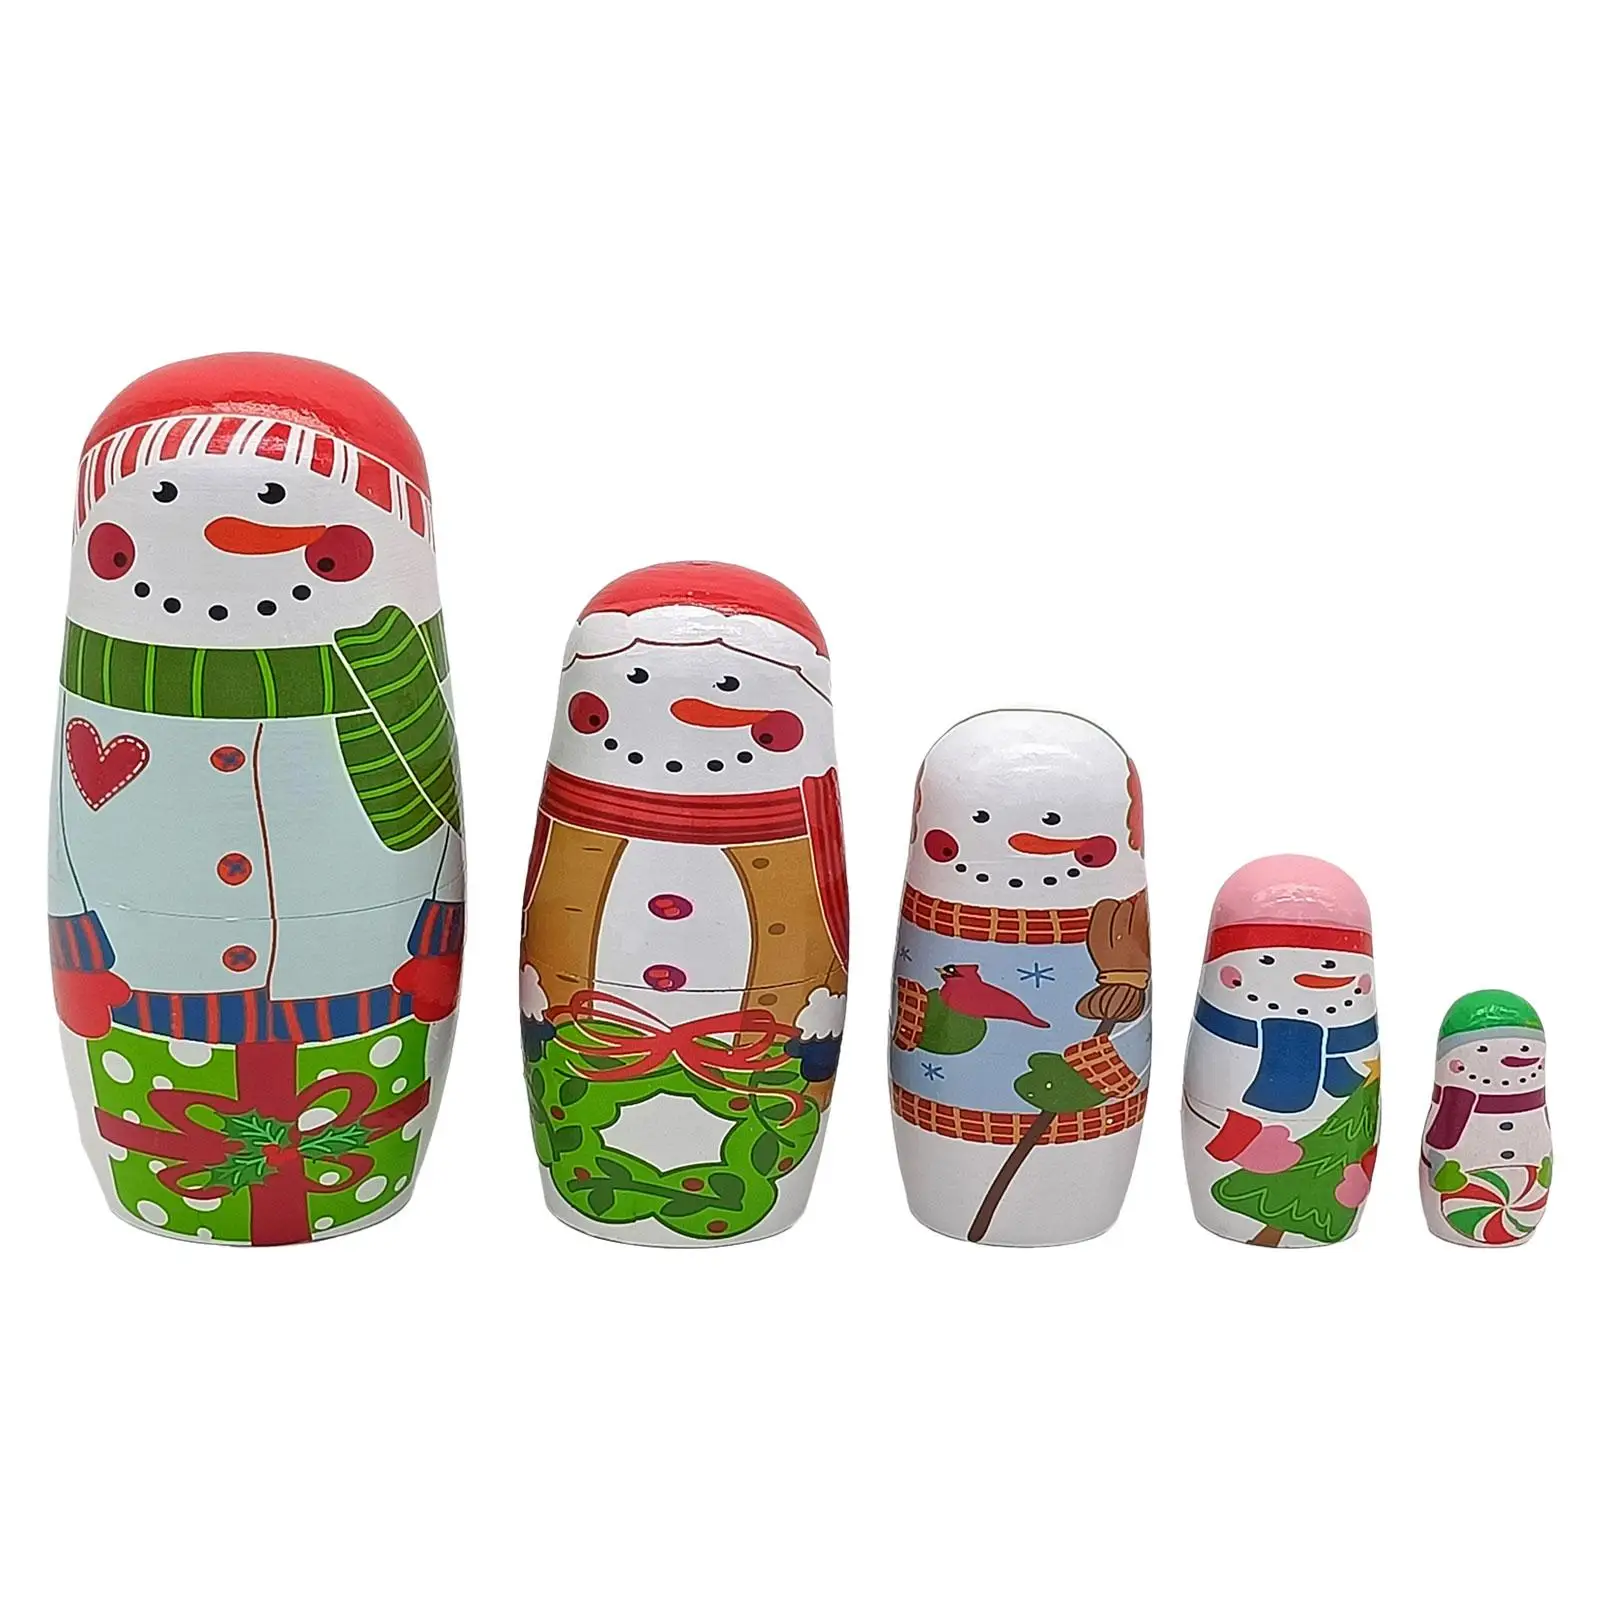 5x Holiday Santa Snowman Nesting Doll Stacking Hand Painted Matryoshka Dolls Nesting Wishing Dolls for Halloween Home Office